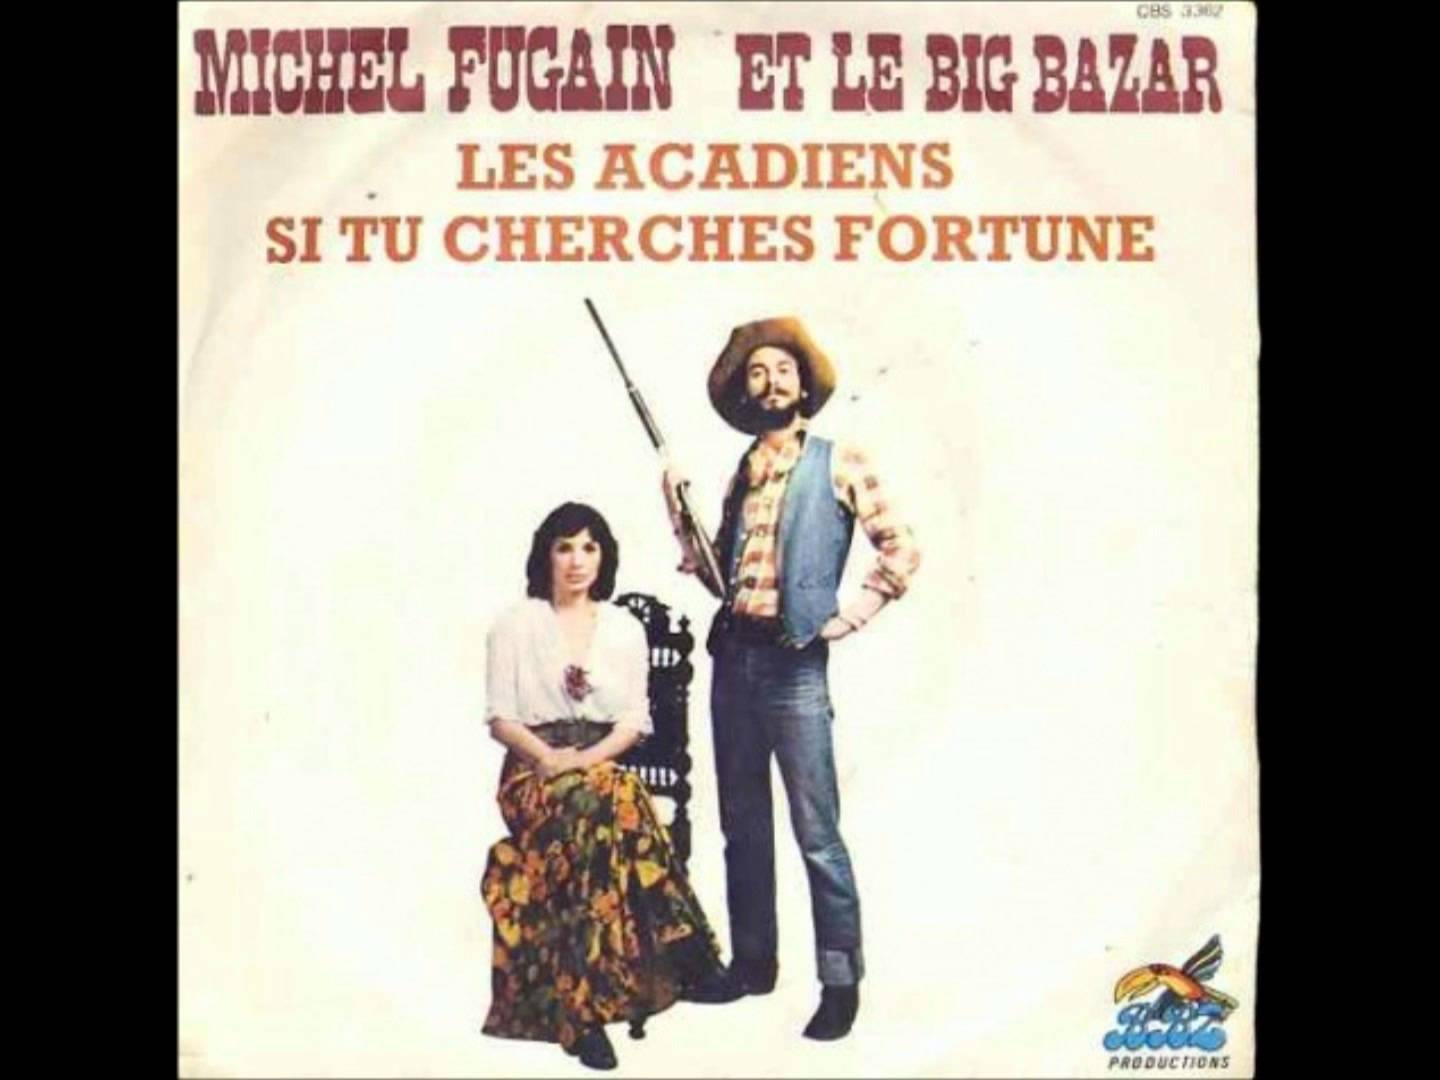 Les Acadiens Michel Fugain